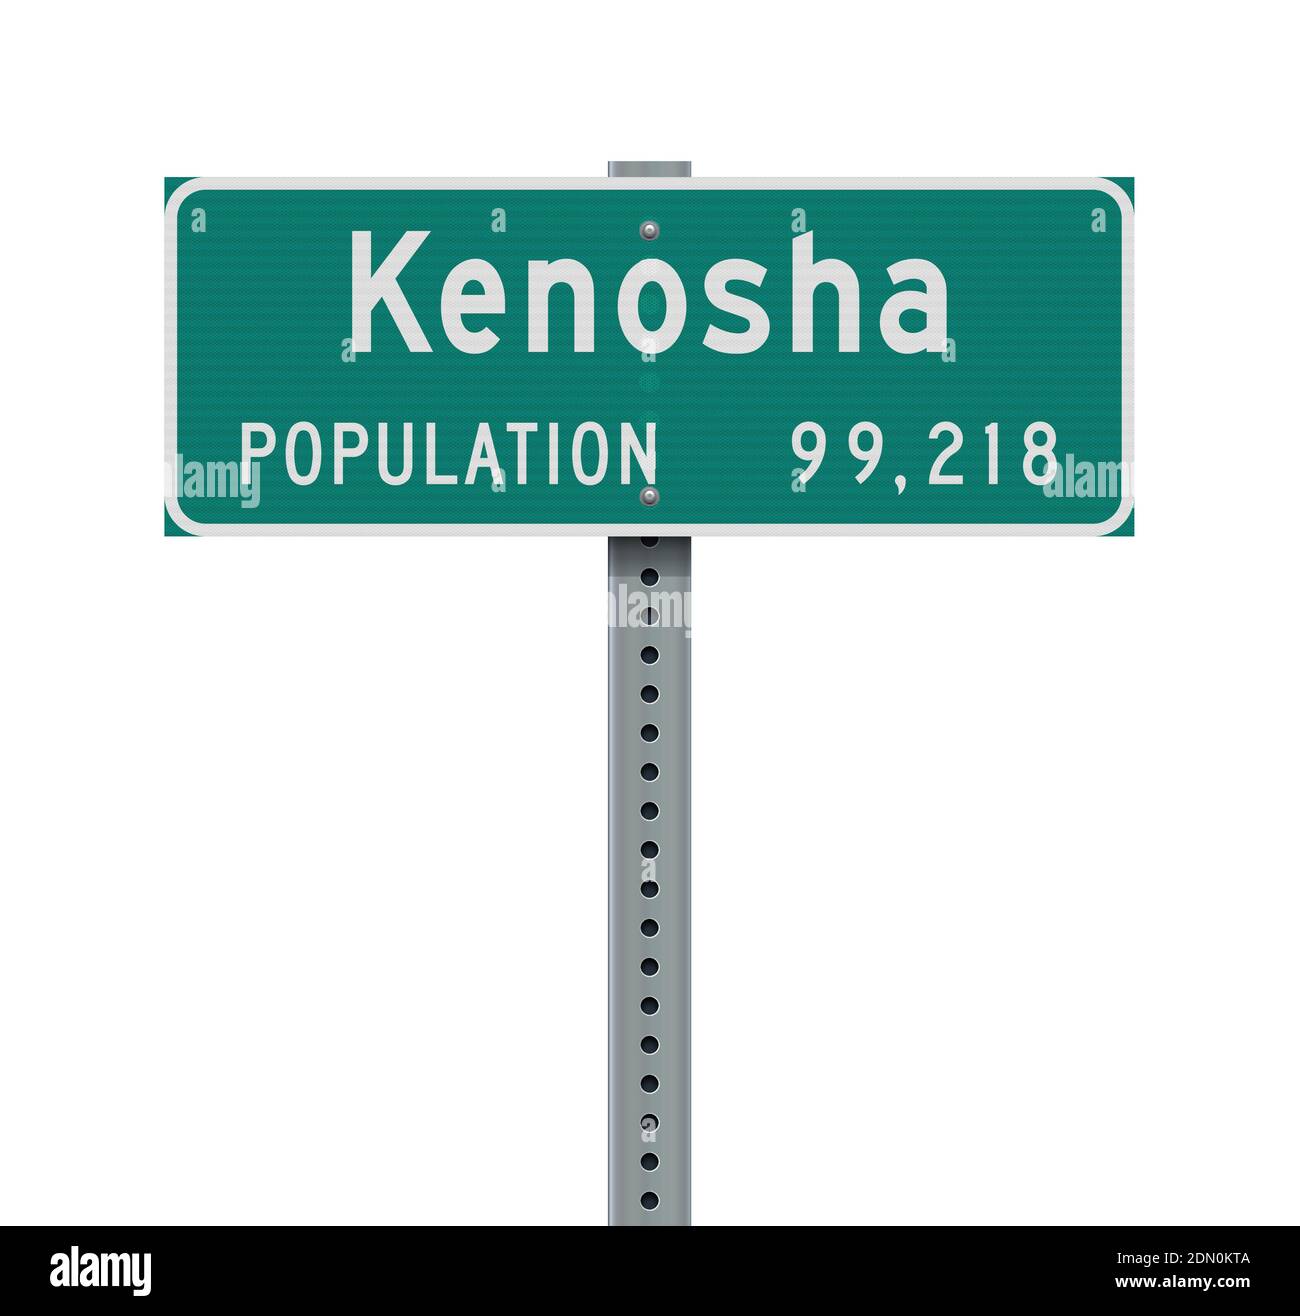 Vektor-Illustration der Kenosha Bevölkerung grüne Straße Zeichen Stock Vektor